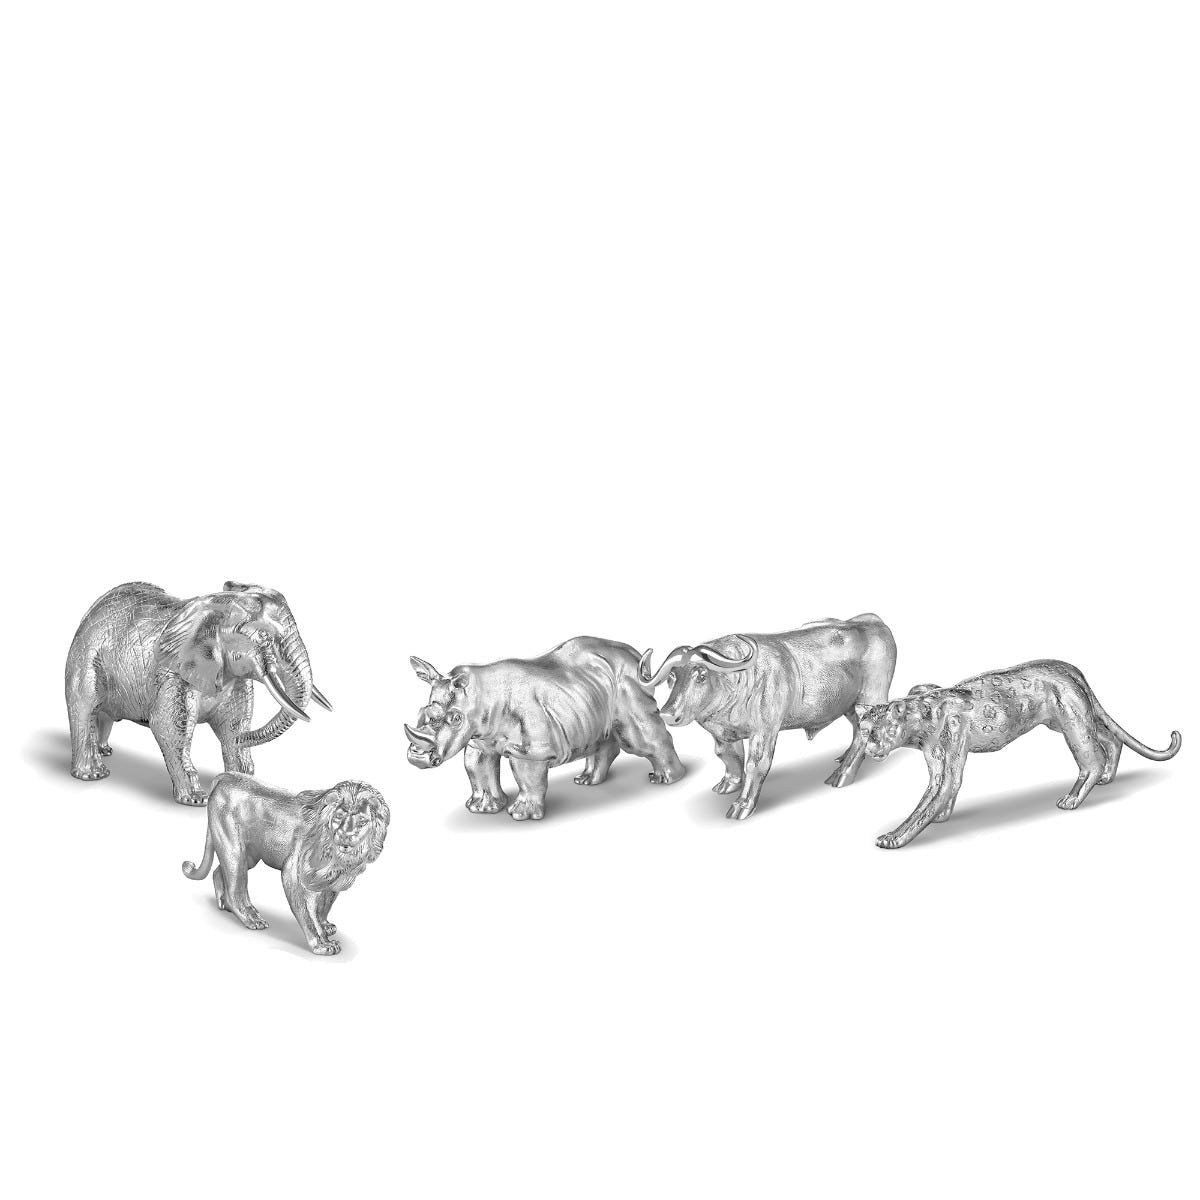 Lion Figurine in Sterling Silver